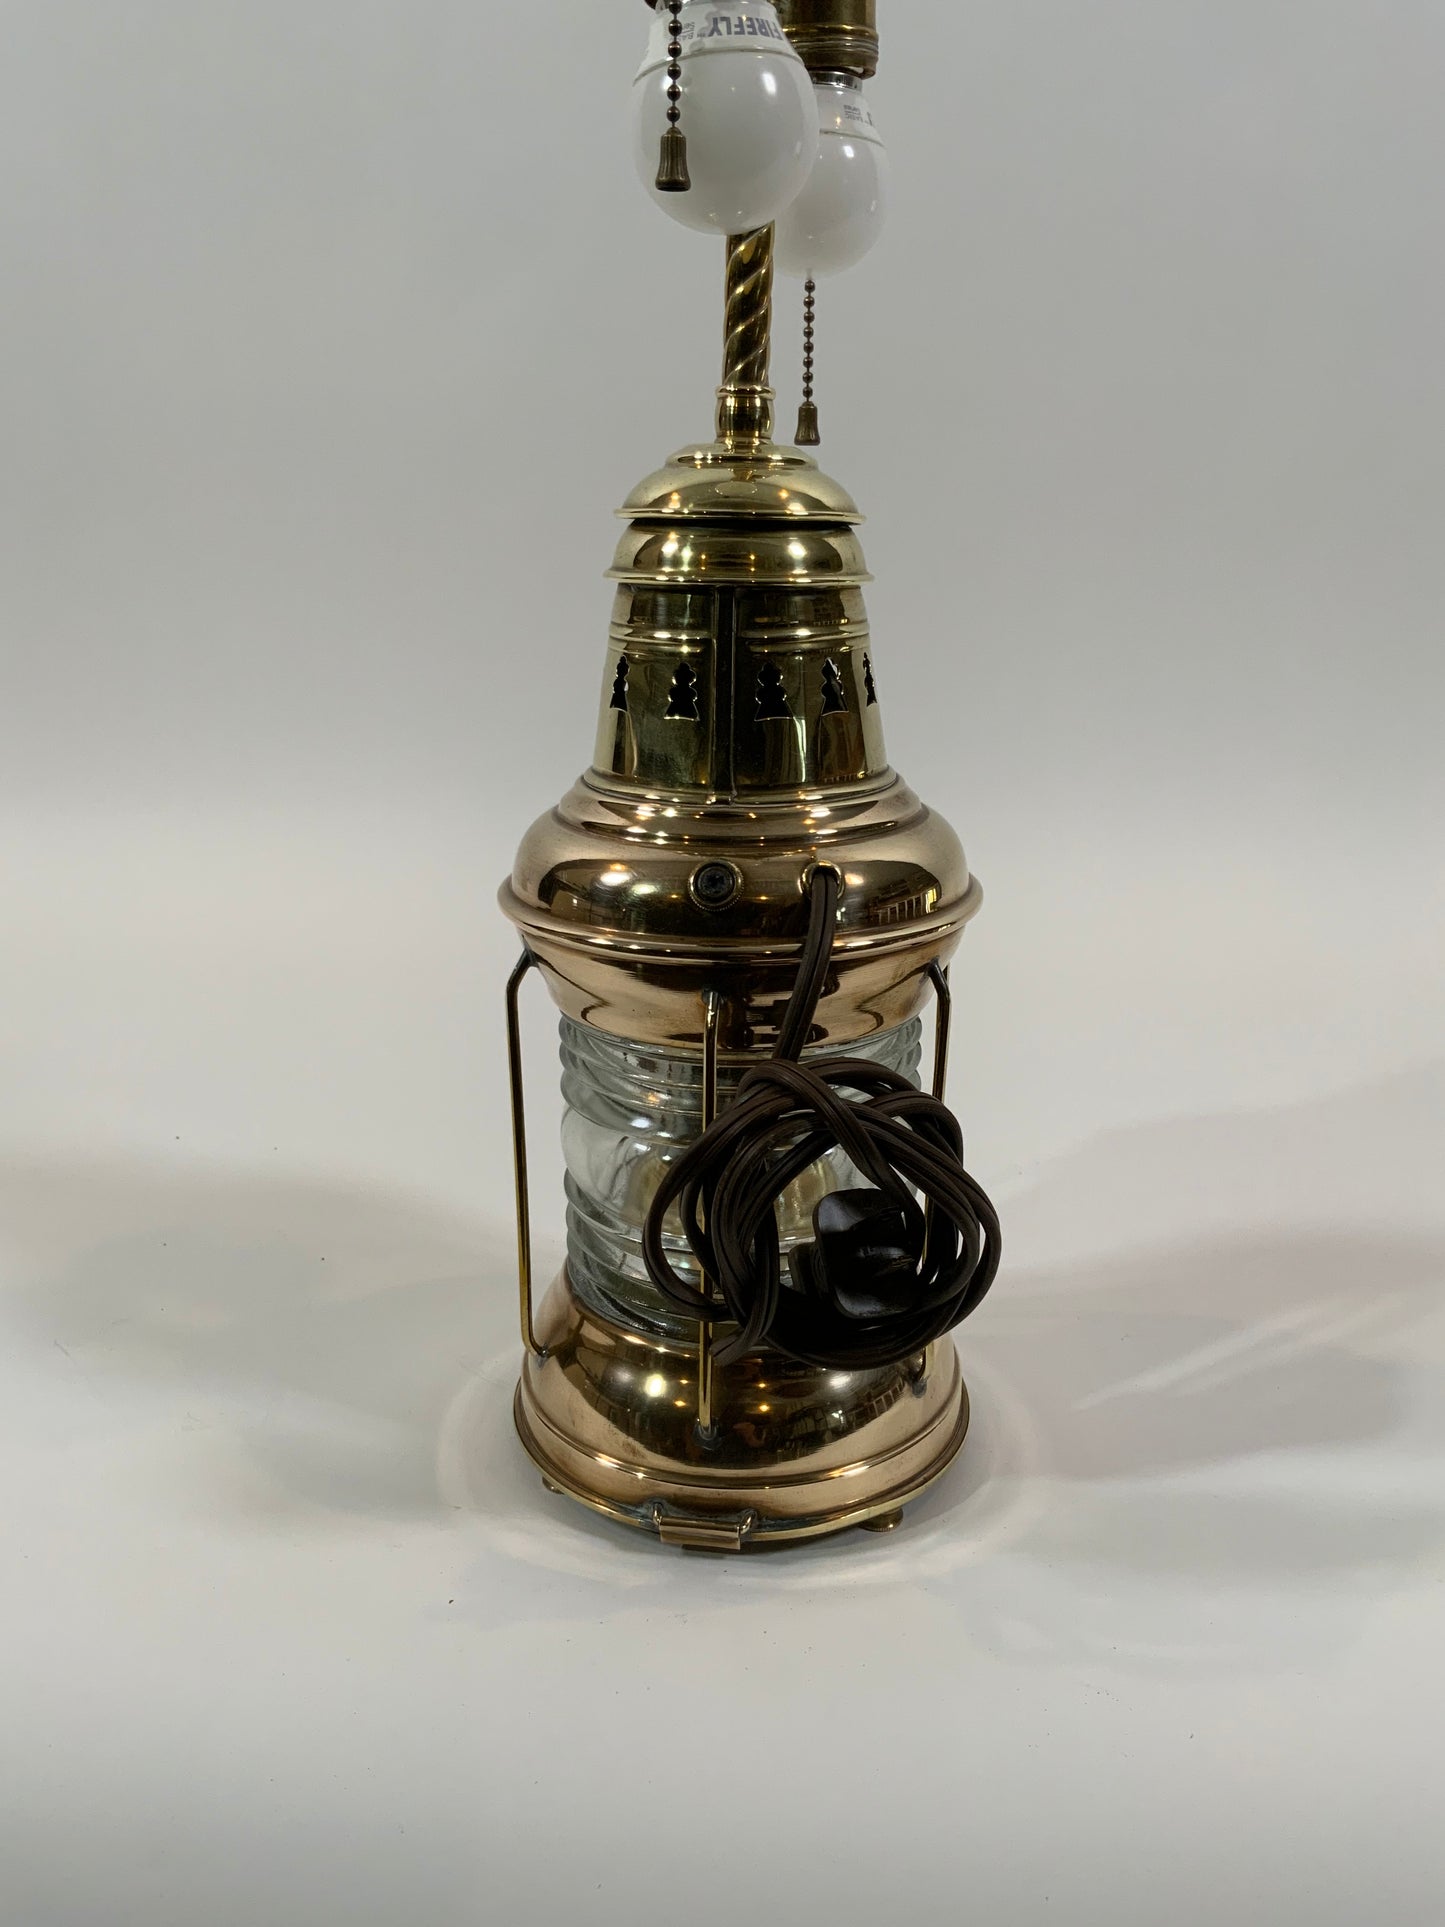 Antique Ships Lantern by Perko now a Lamp - Lannan Gallery